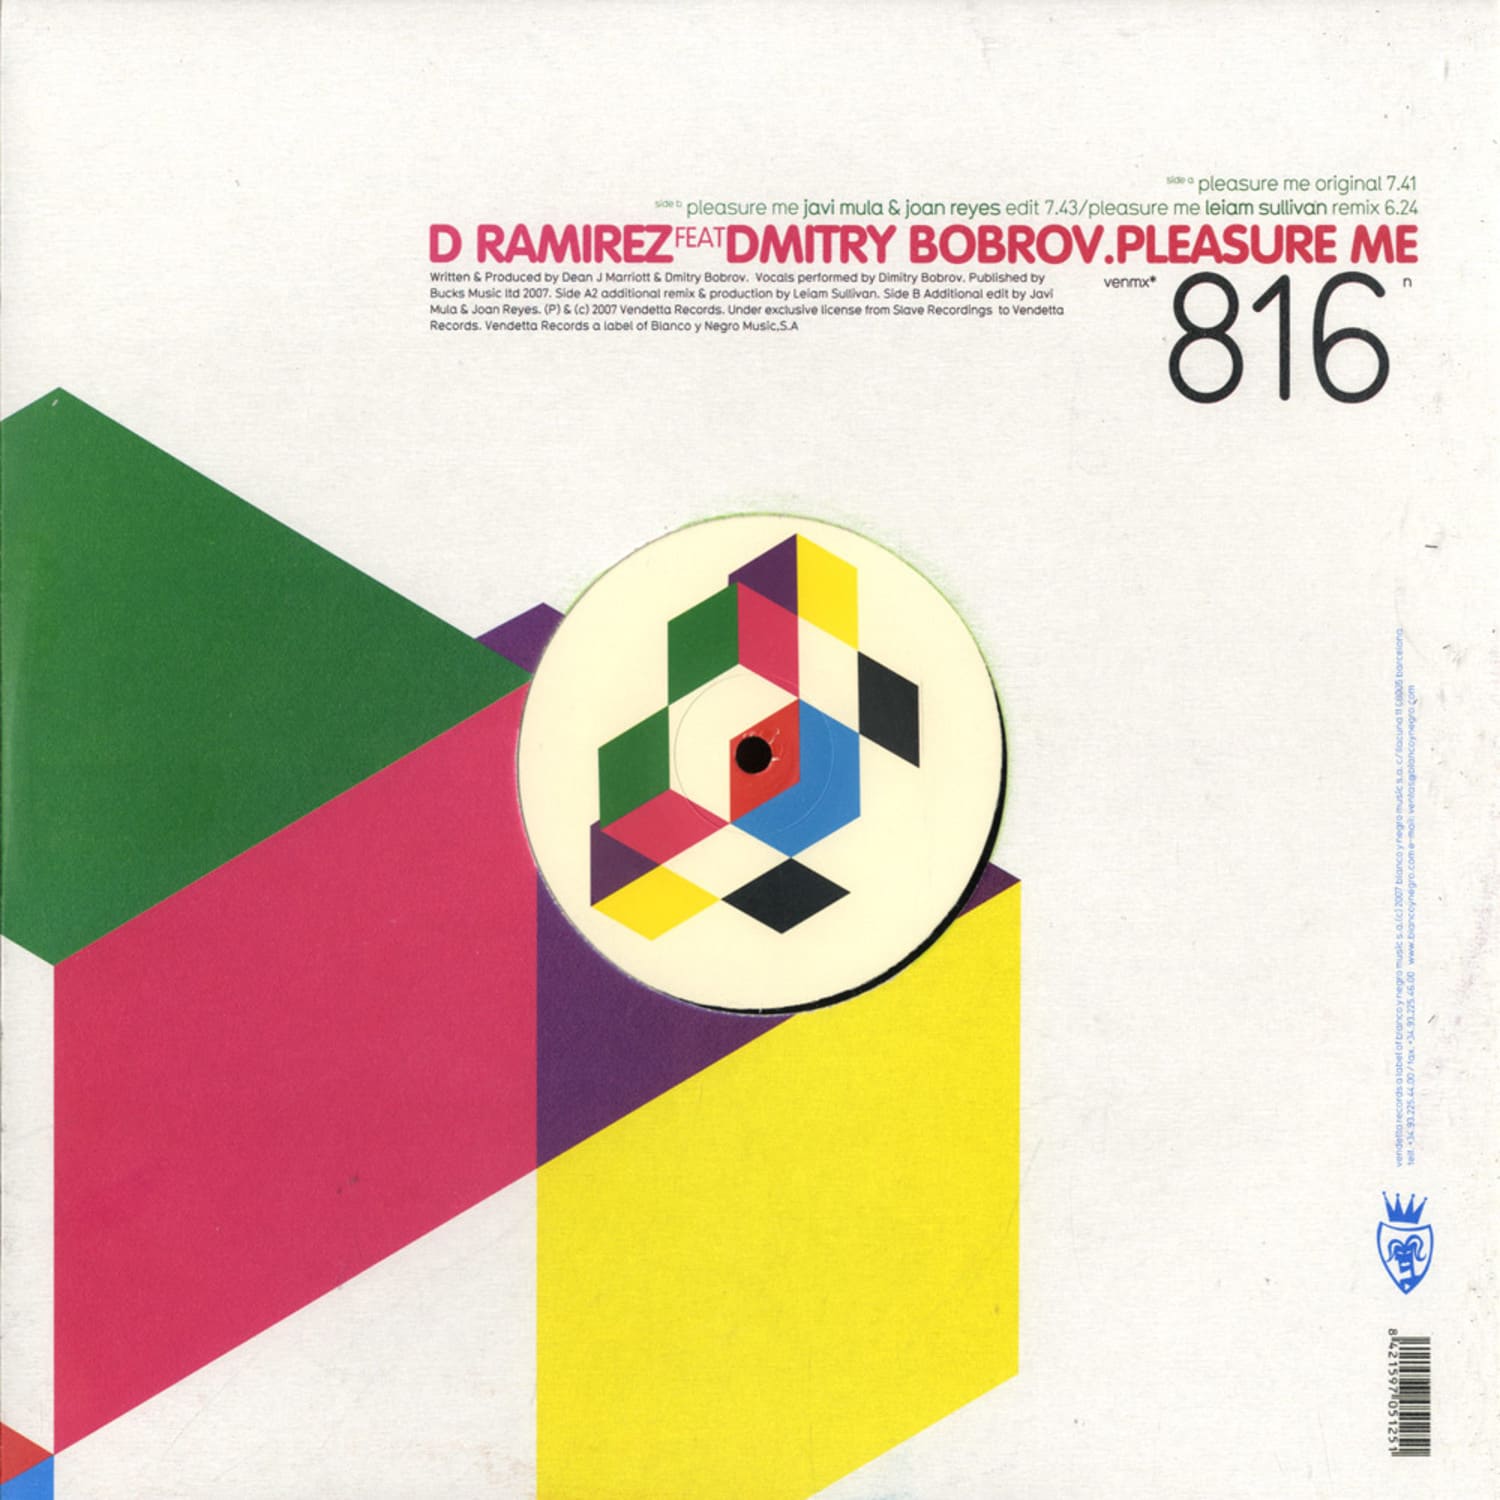 D Ramirez feat. Dimitry Bobrov - PLEASURE ME